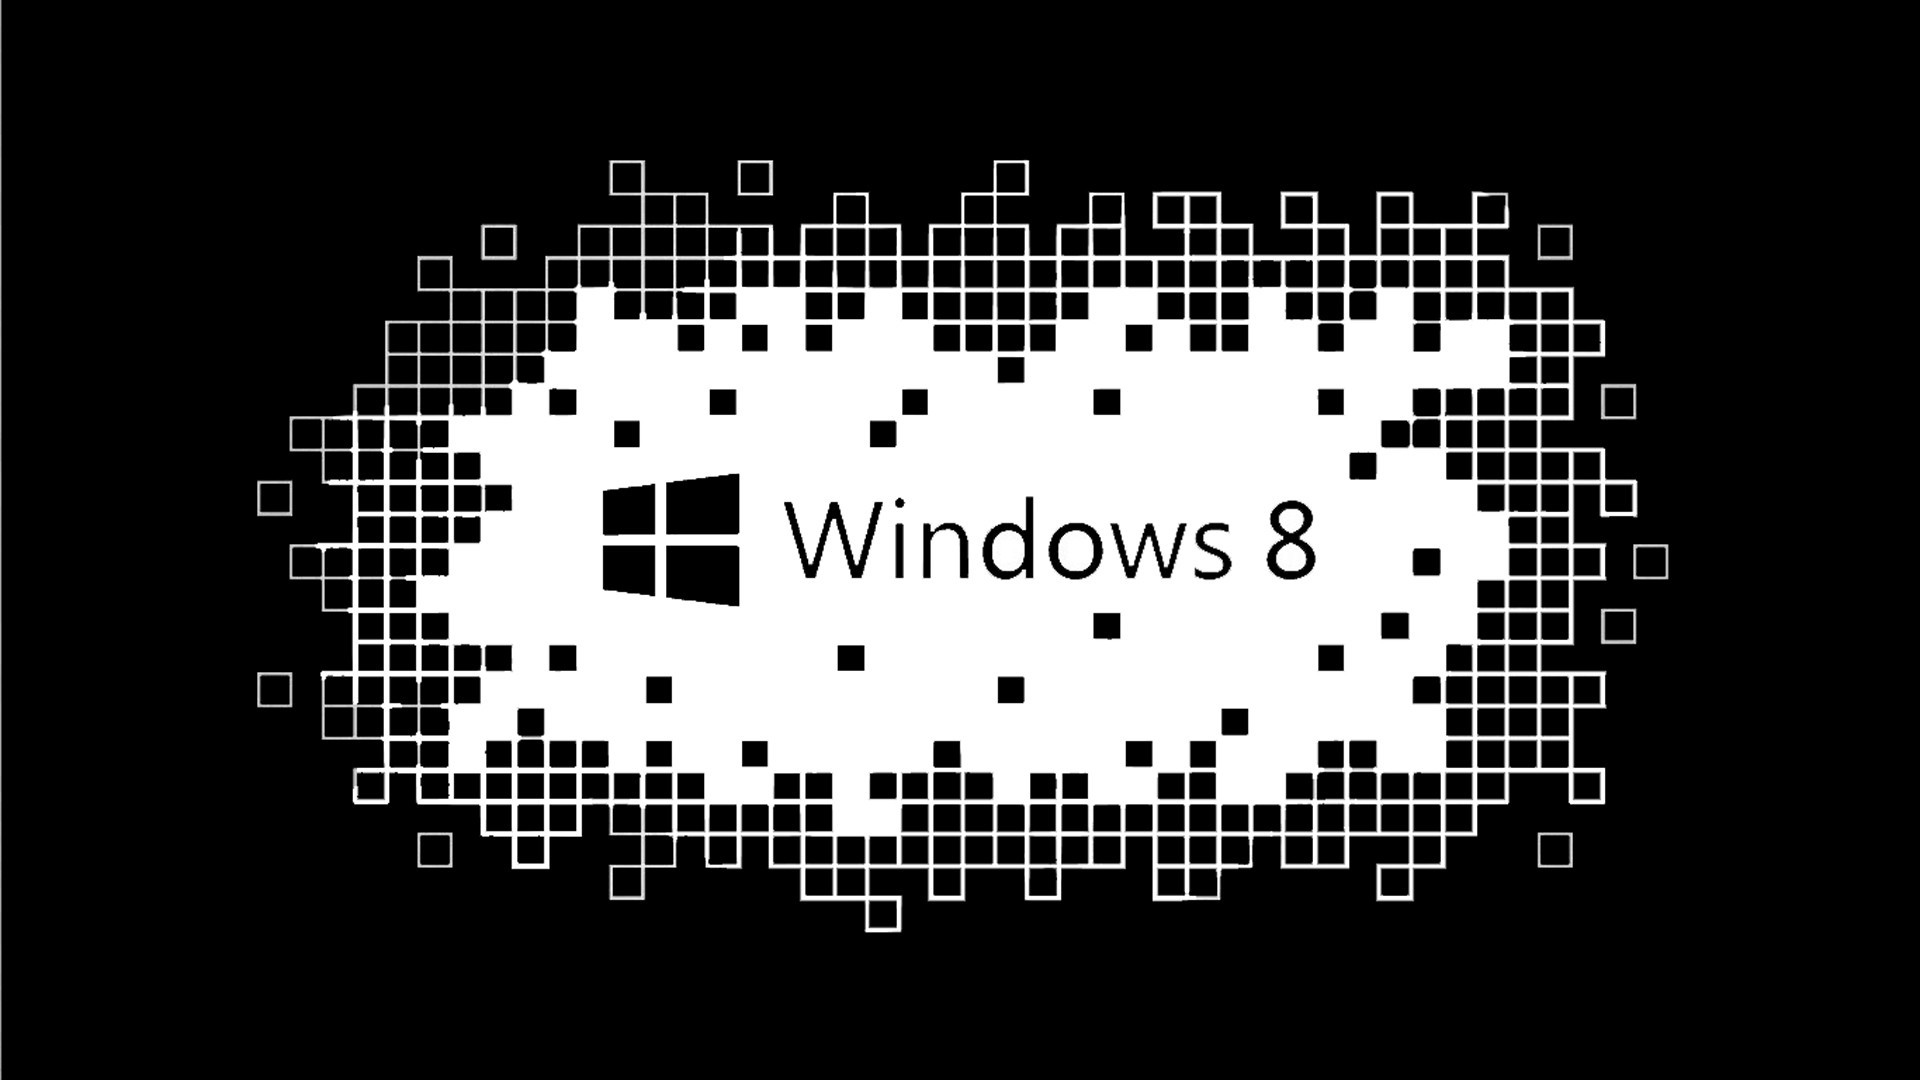 1920x1080 Windows 8 Black and White Grid Desktop Wallpaper